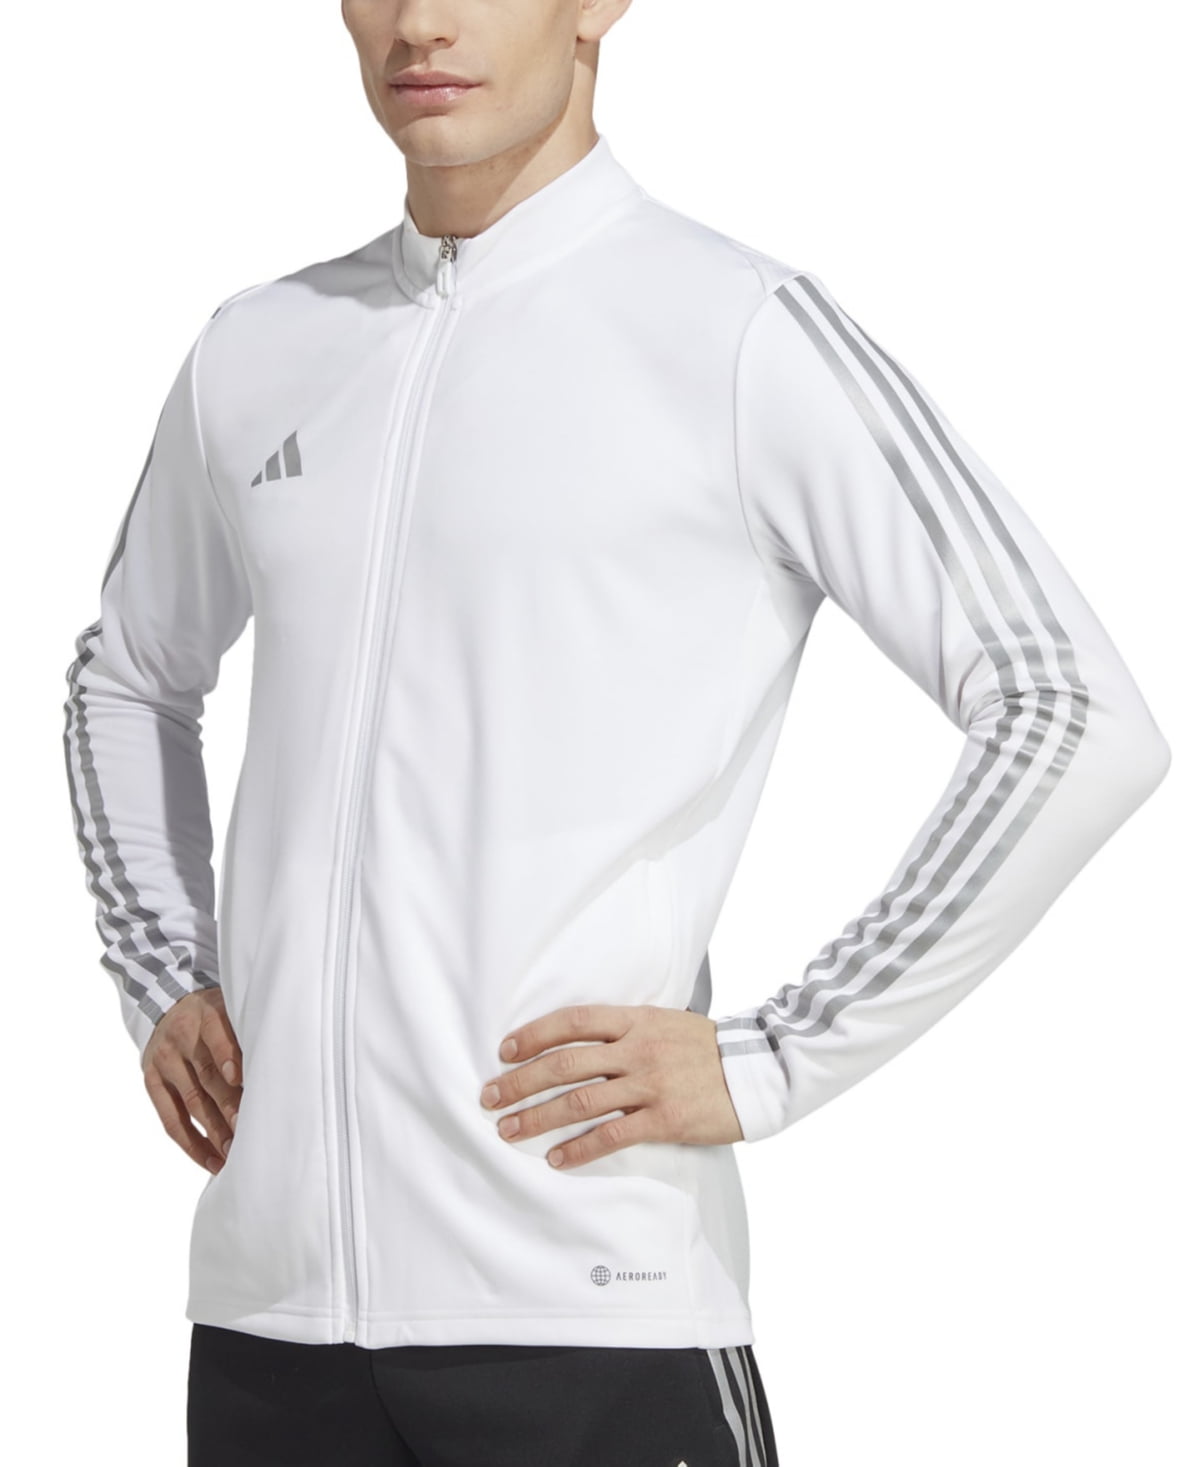 Adidas Men's Reflective Full Zip Training Sweatshirt Jacket white ...